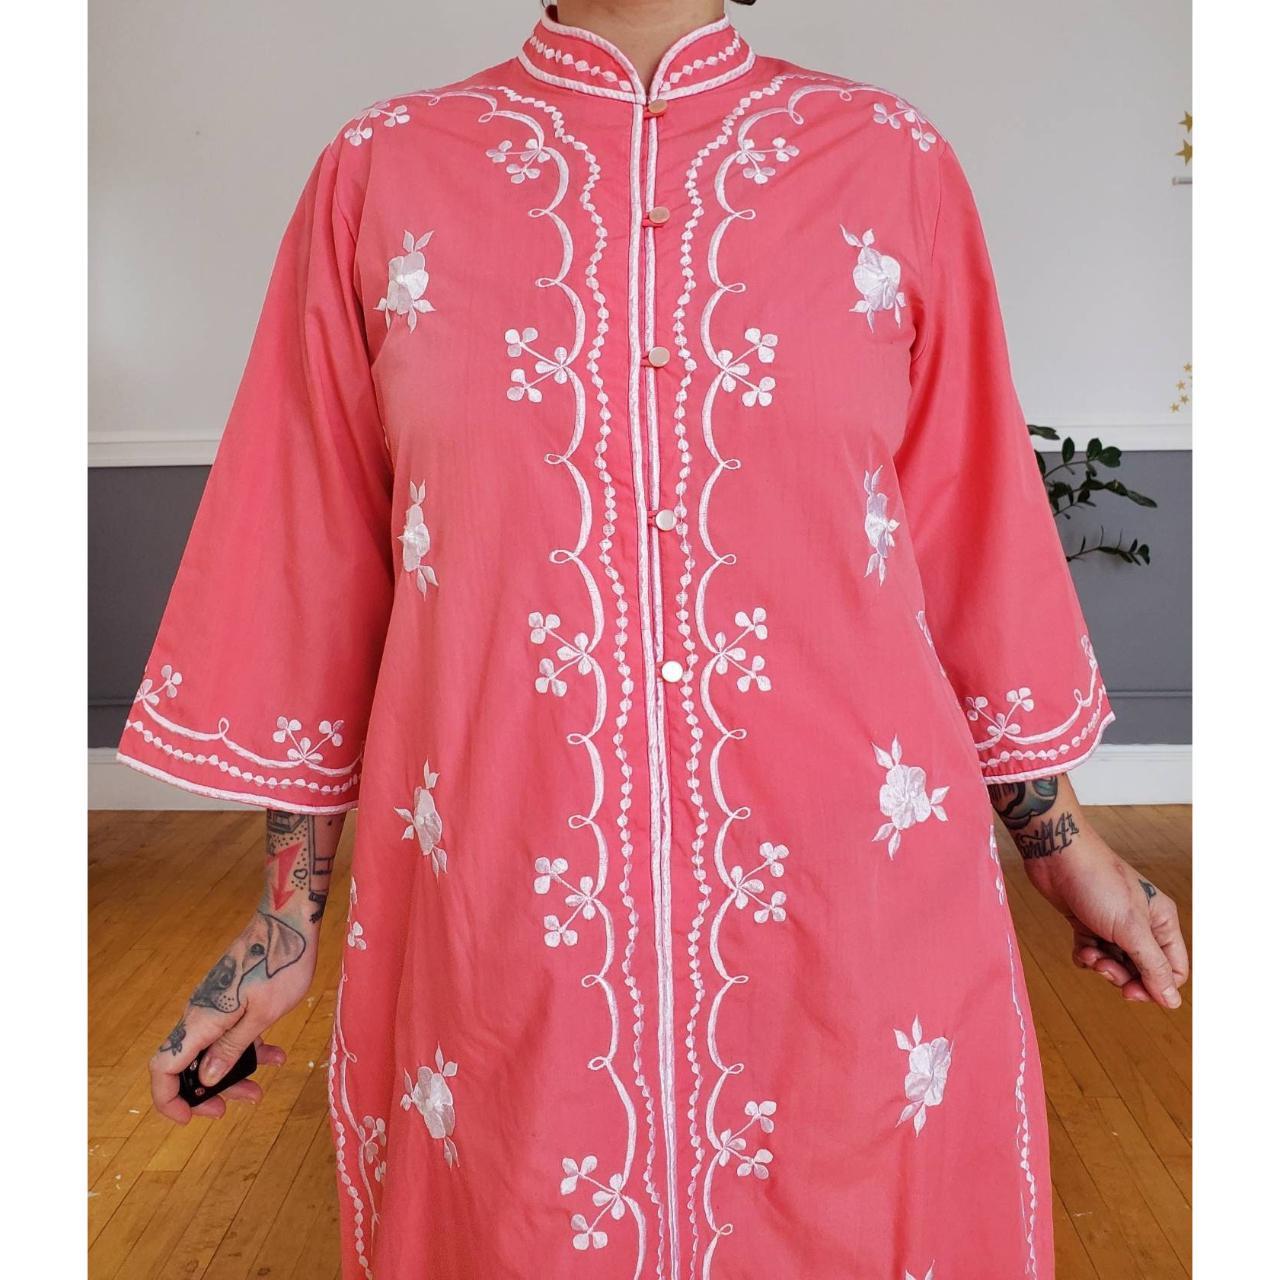 Women's White and Pink Robe (2)